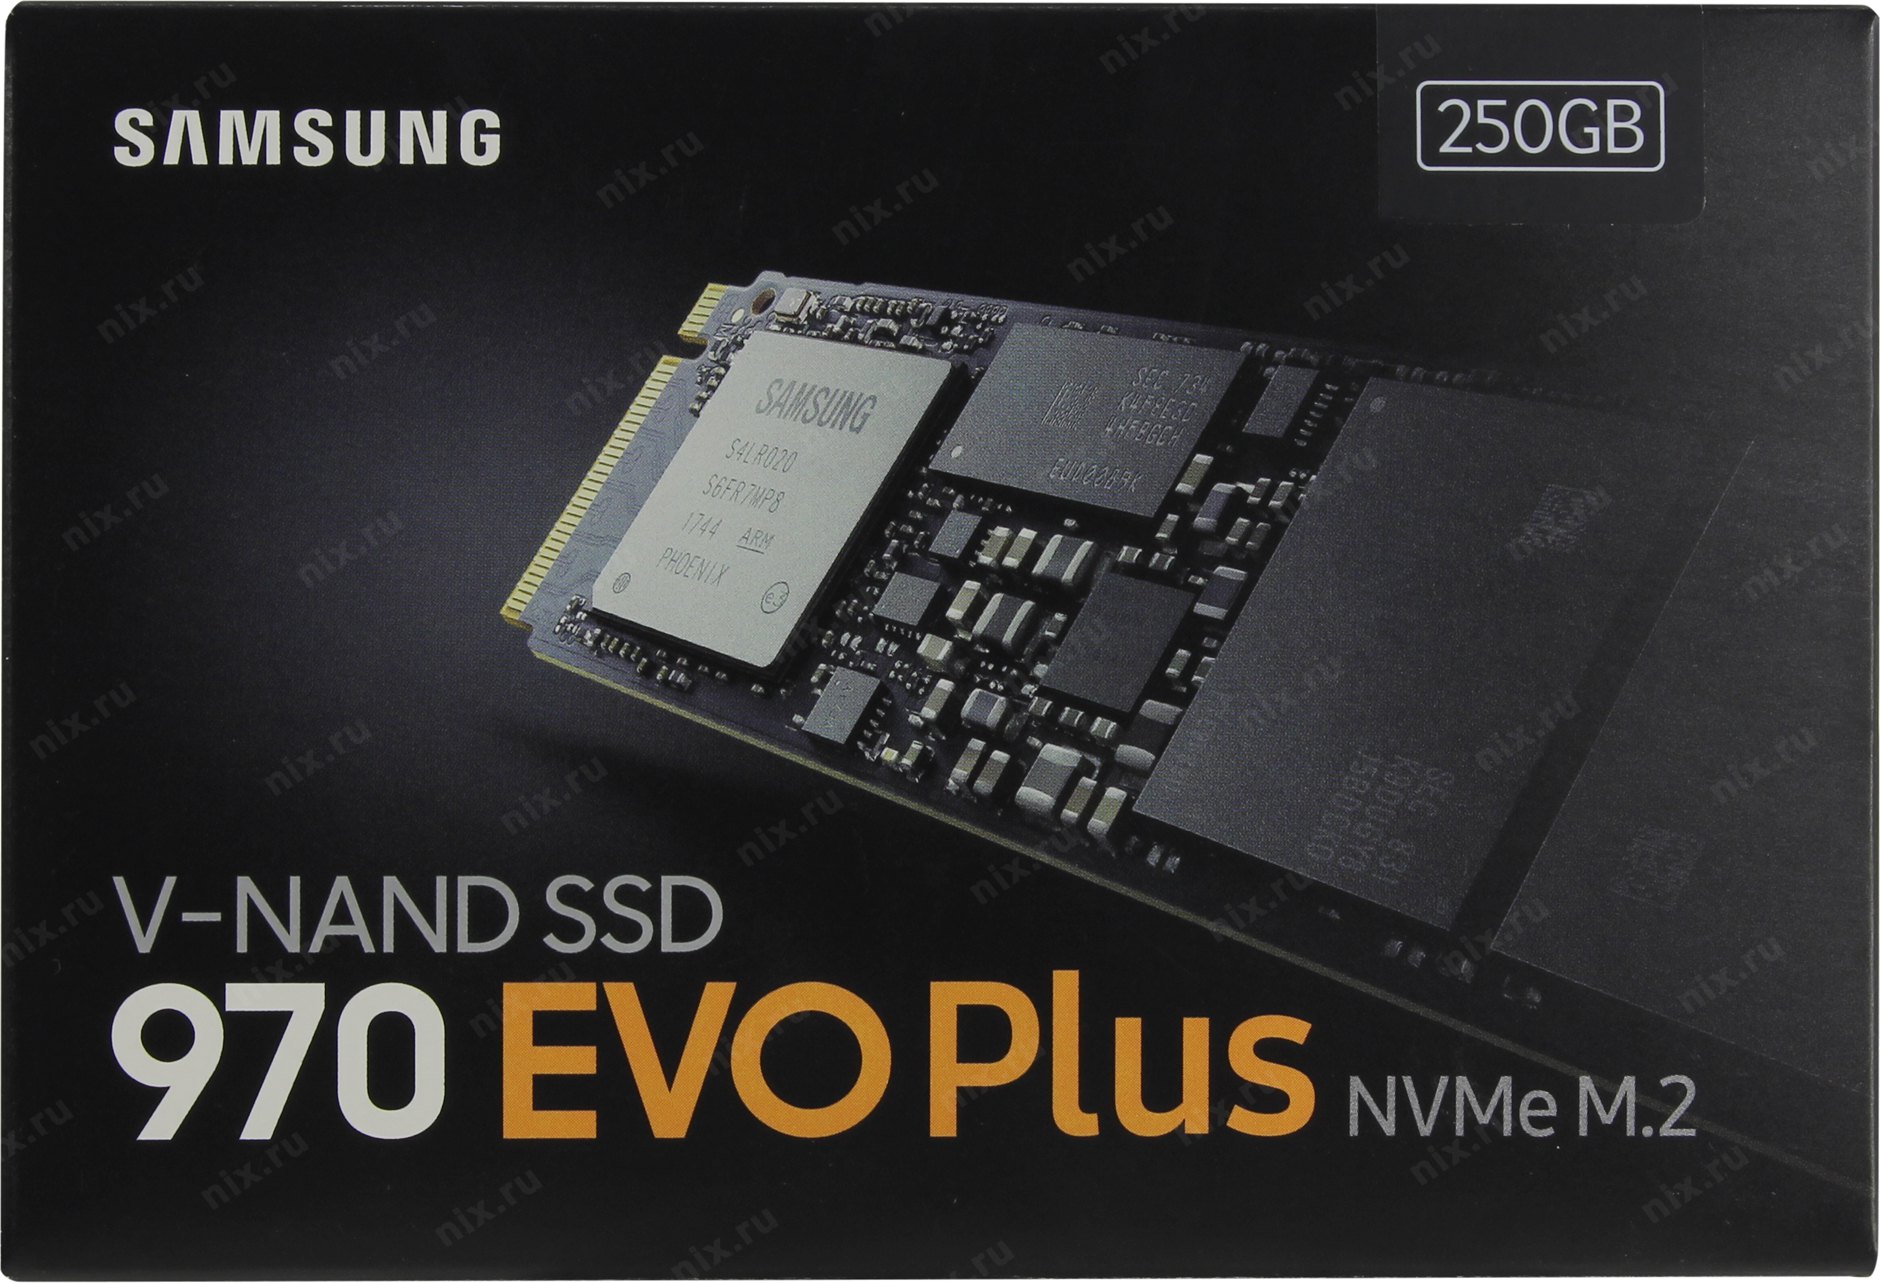 Ssd Samsung 970 Evo Series